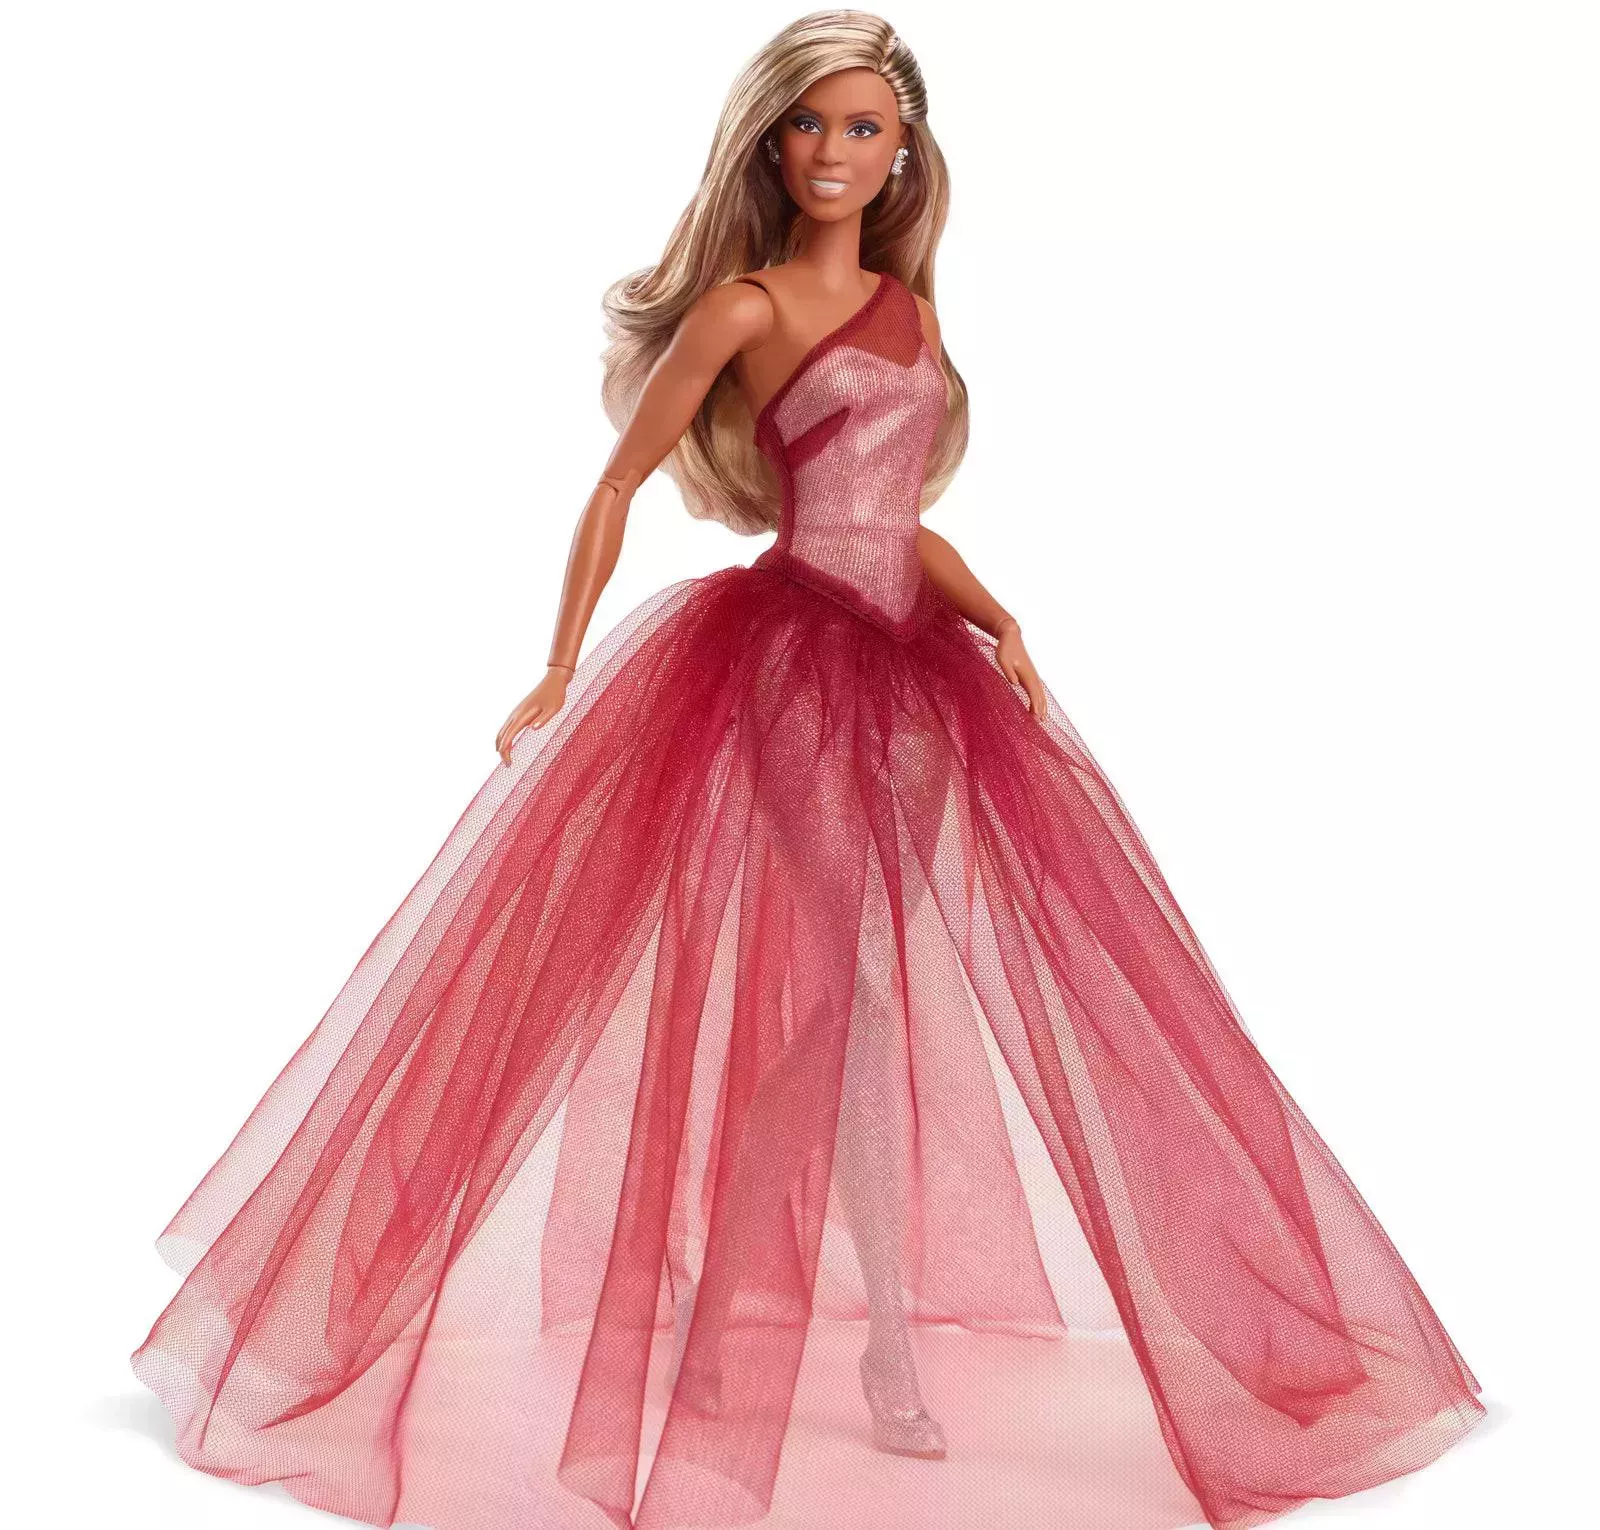 Laverne Cox inspira la primera muñeca Barbie transgénero